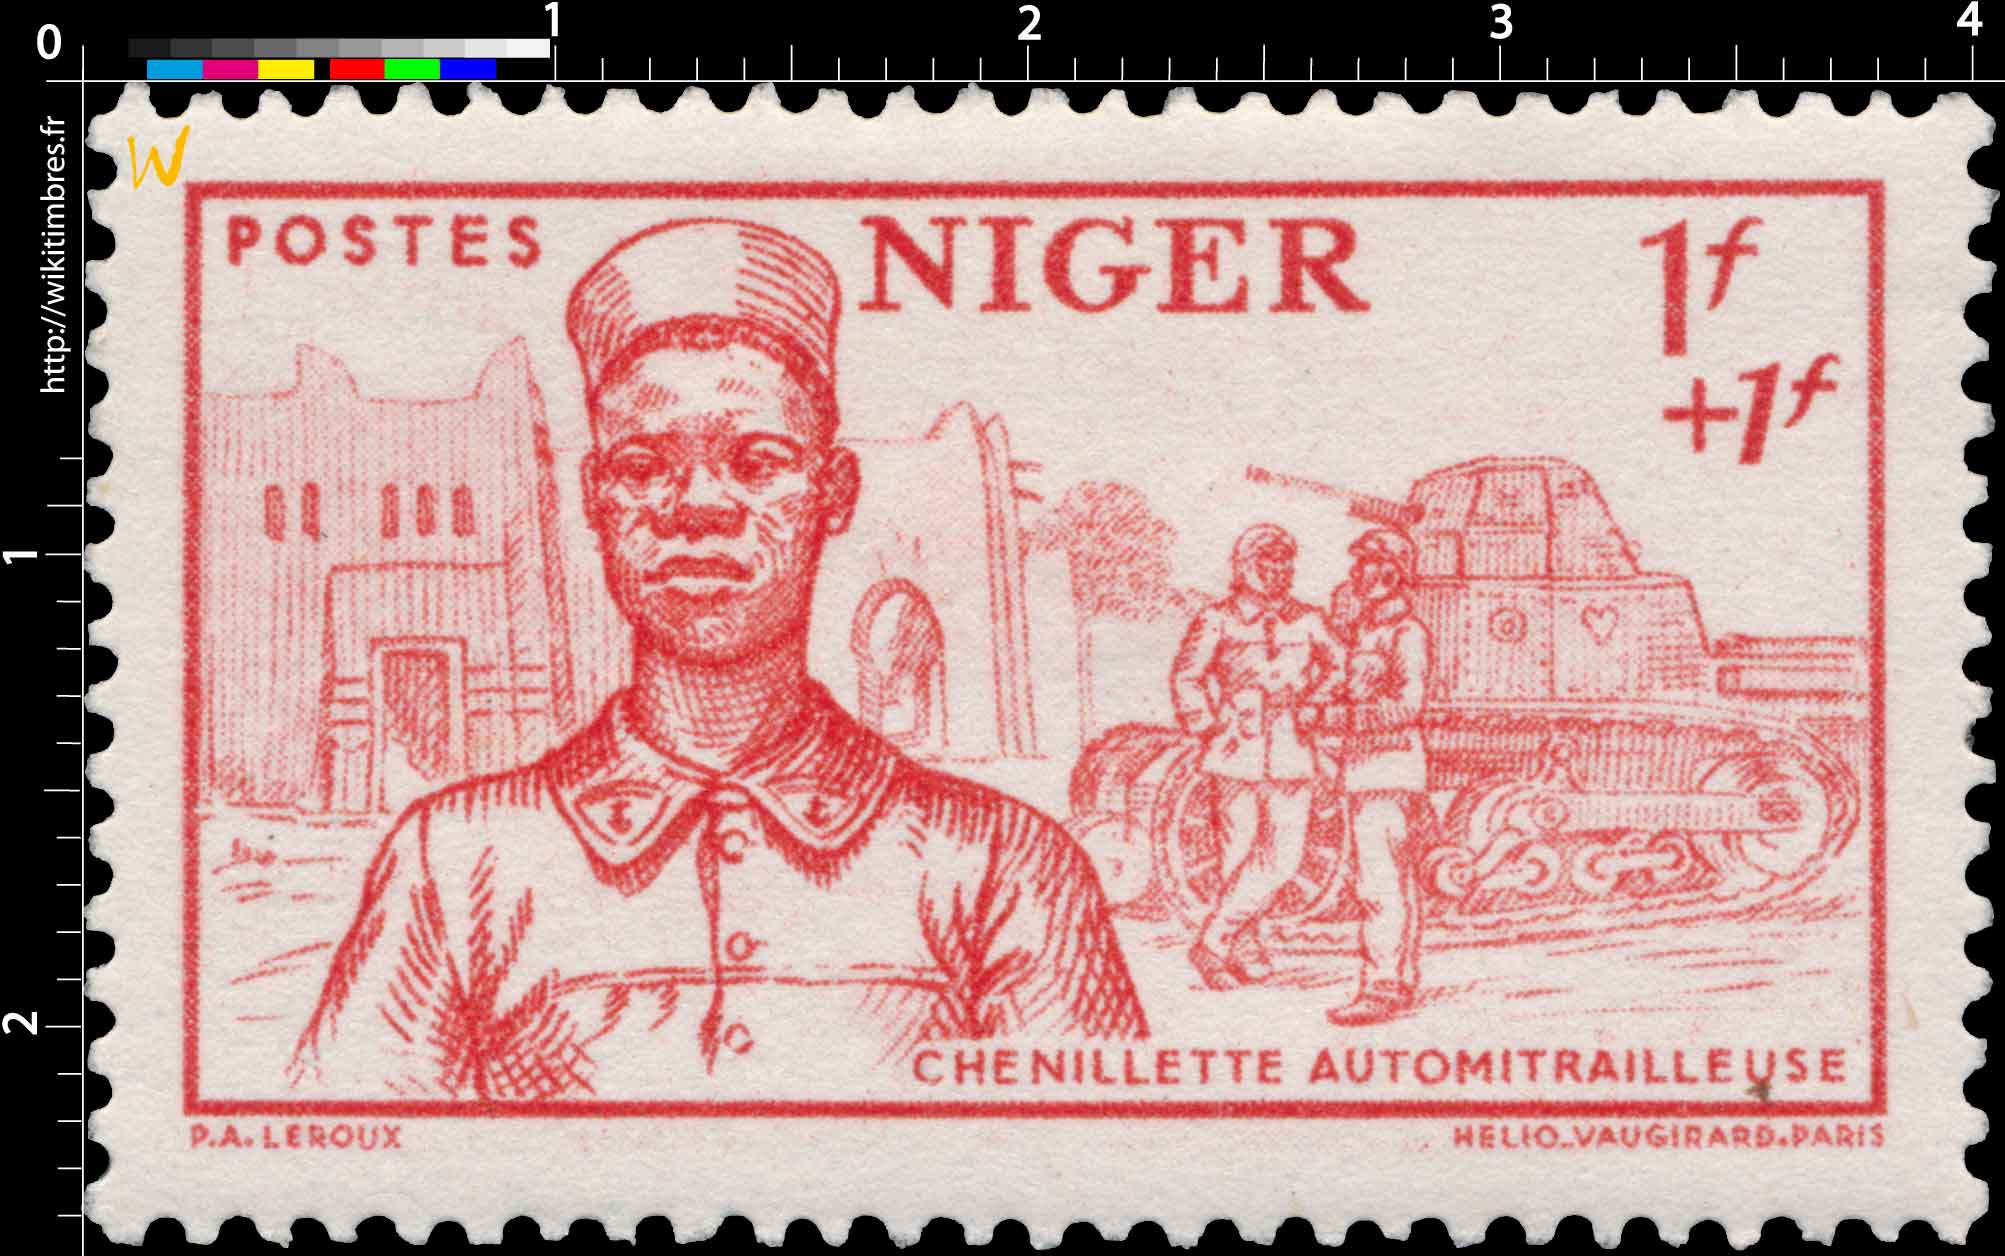 Niger - Chenillette automitrailleuse